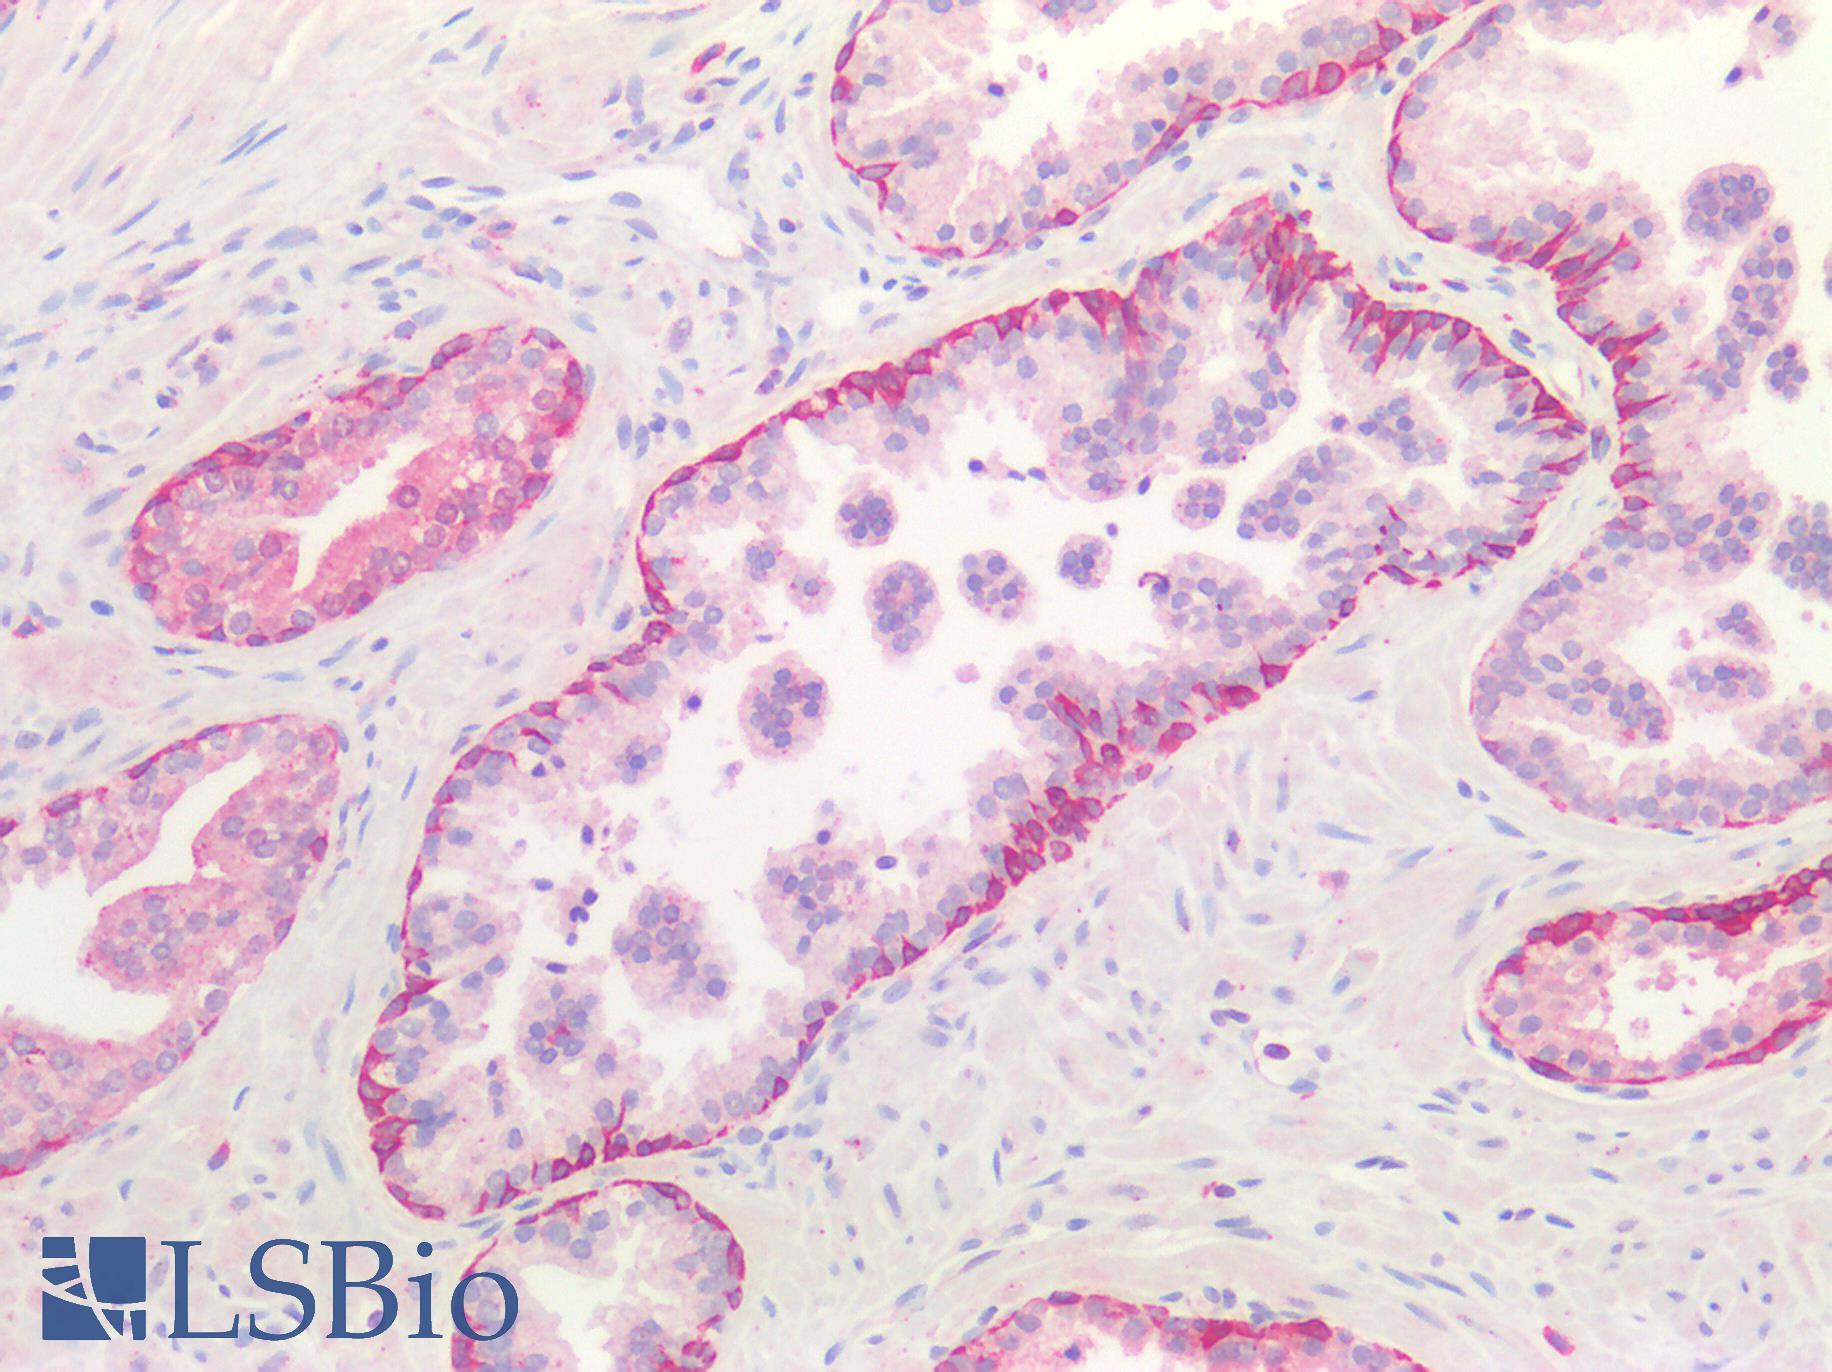 CTSB / Cathepsin B Antibody - Human Prostate: Formalin-Fixed, Paraffin-Embedded (FFPE)